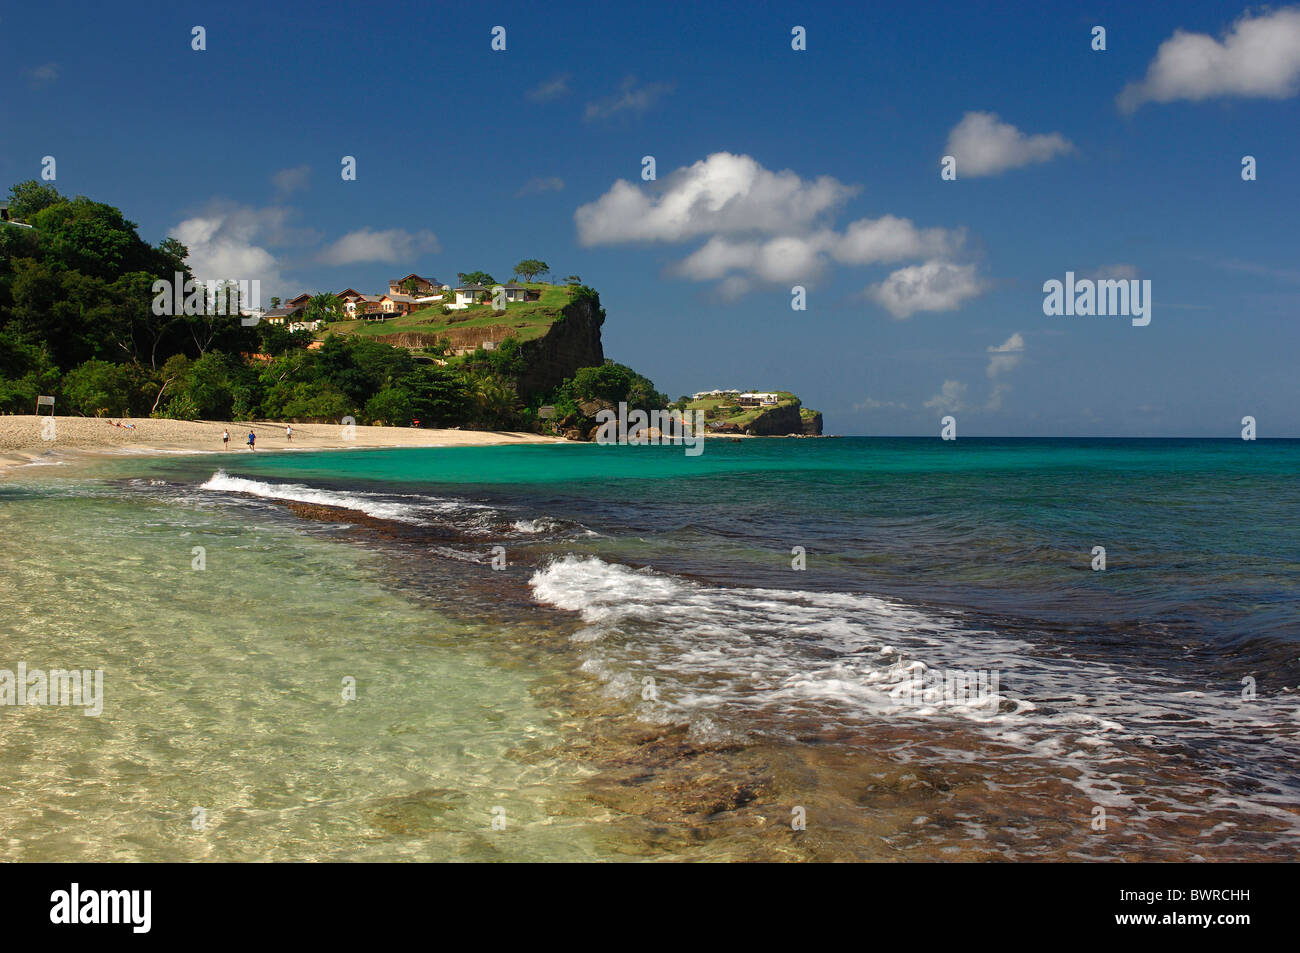 Grenada Palmen Maca Bana Villen Karibik Insel Hotel Resort Gebäude Haus Tourismus Reisen Urlaub Ho Stockfoto